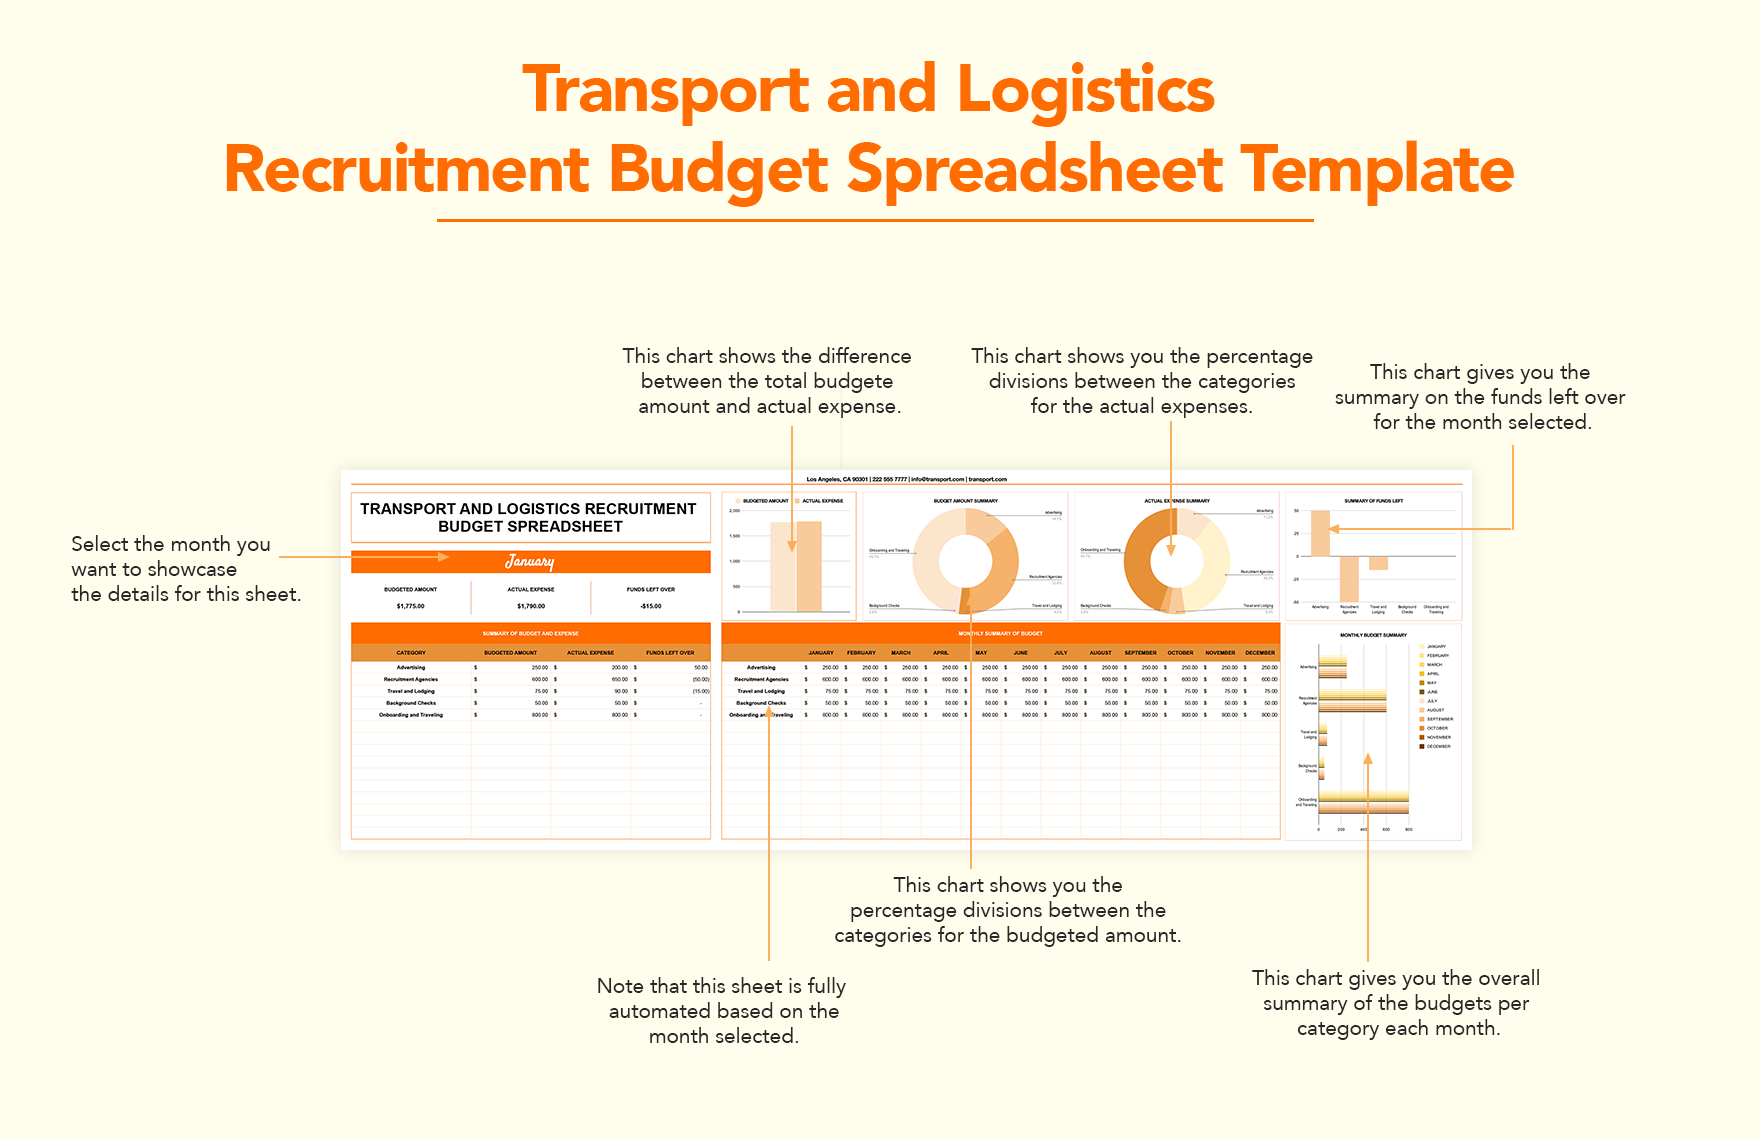 Transport and Logistics Recruitment Budget Spreadsheet Template